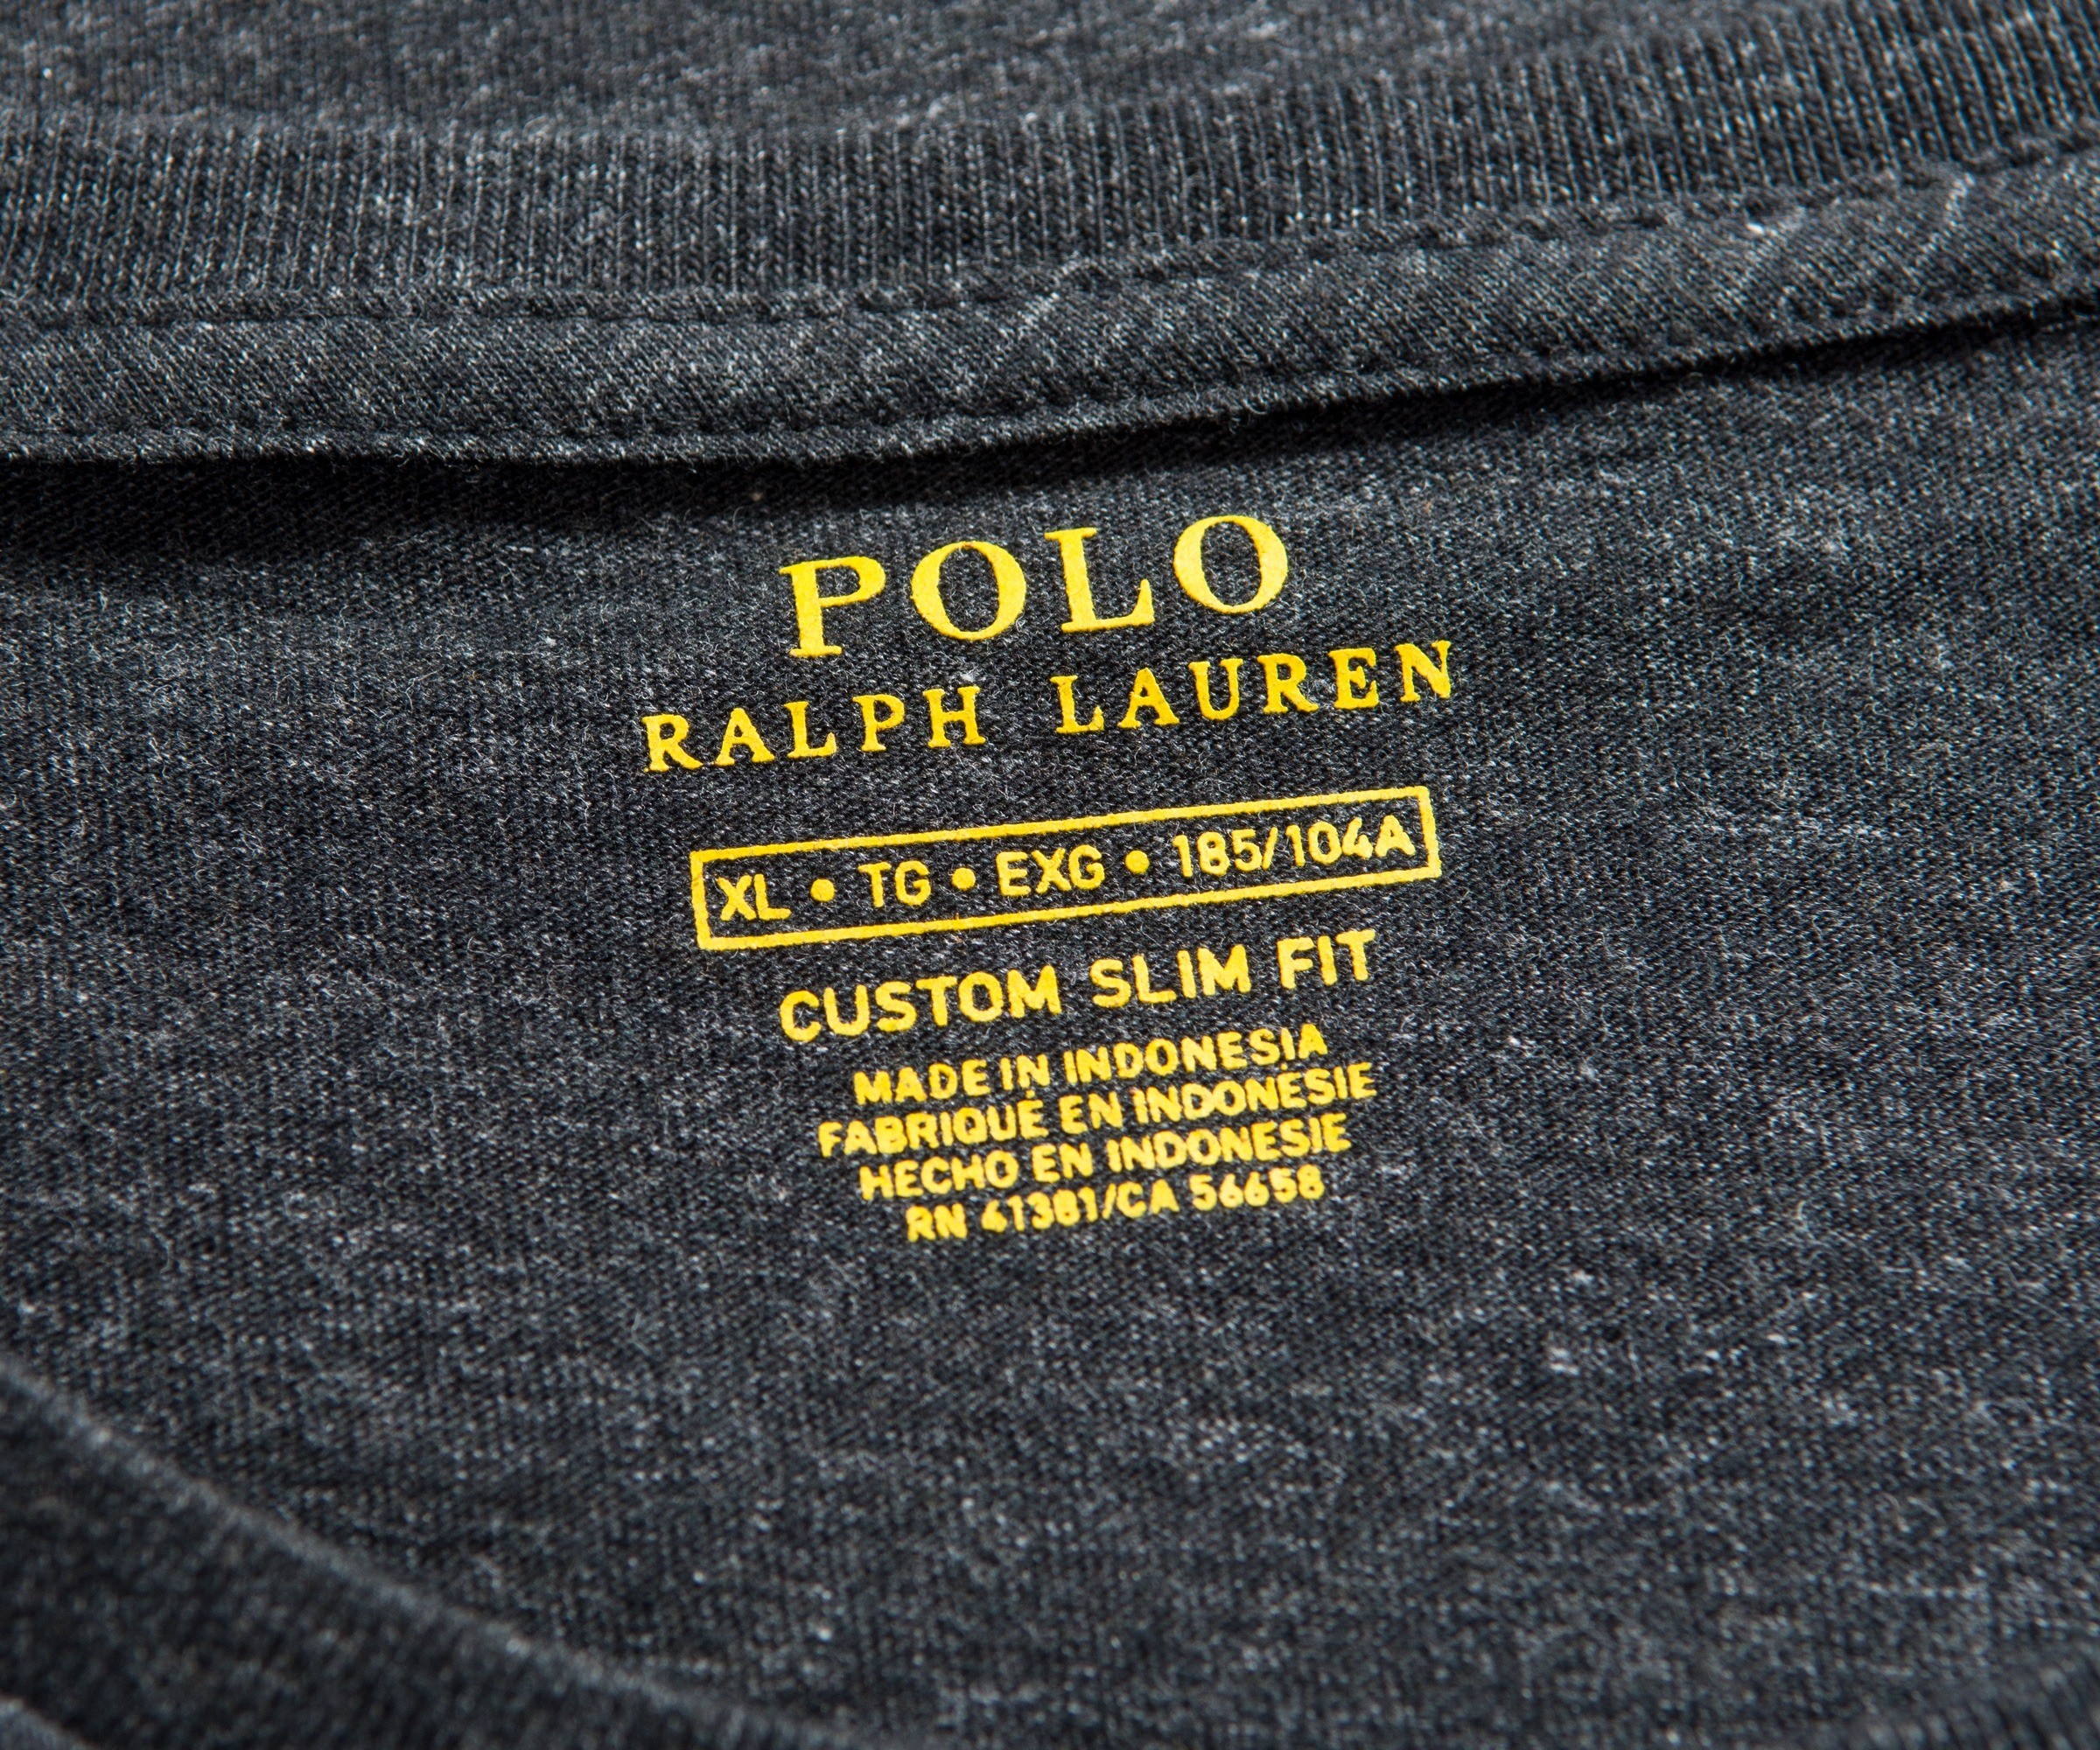 Polo Ralph Lauren Long Sleeved Cotton T-Shirt Black Marl Heather